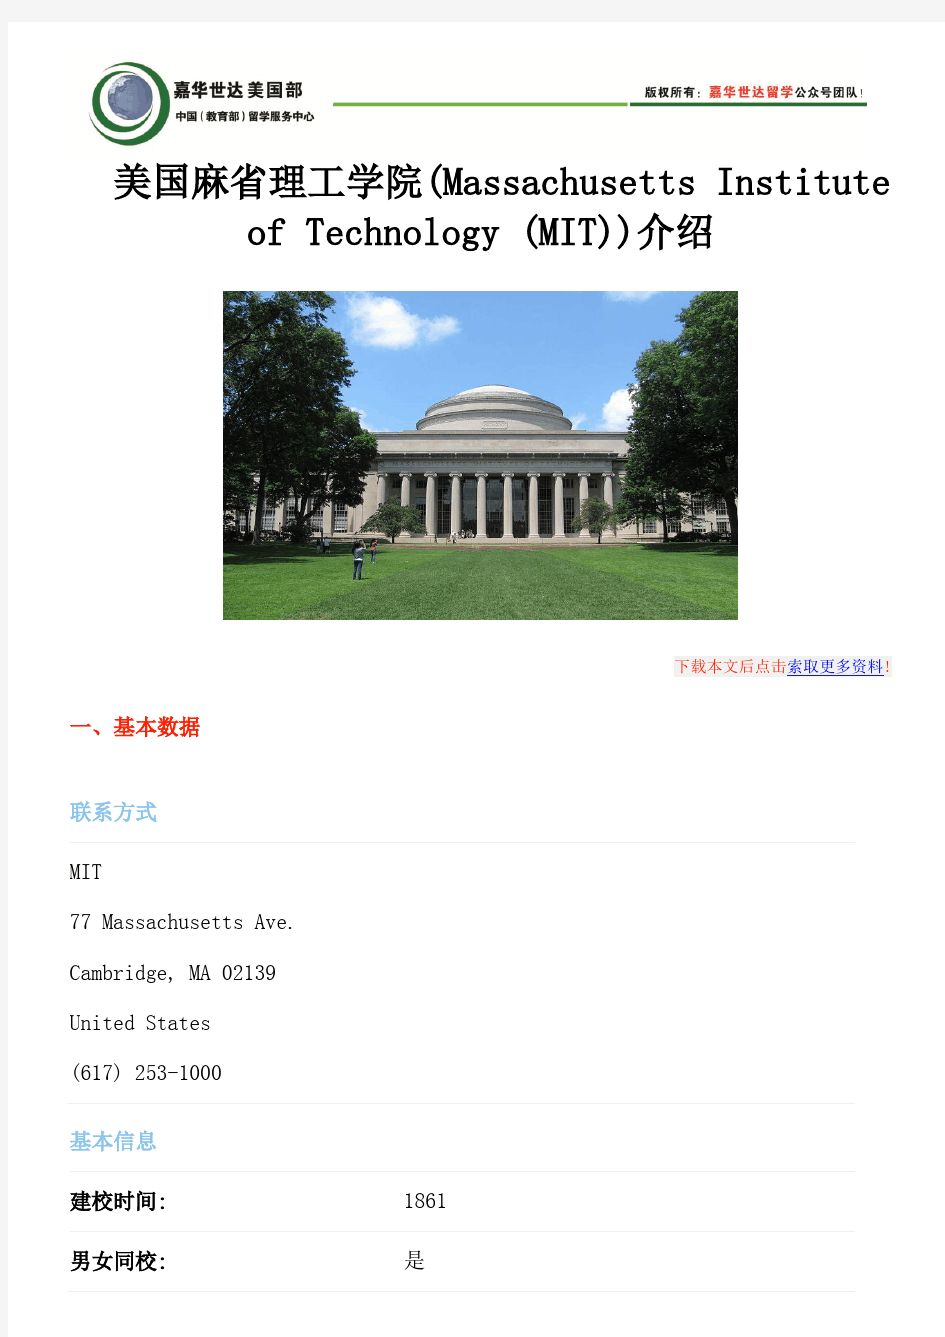 美国麻省理工学院(Massachusetts Institute of Technology (MIT))介绍